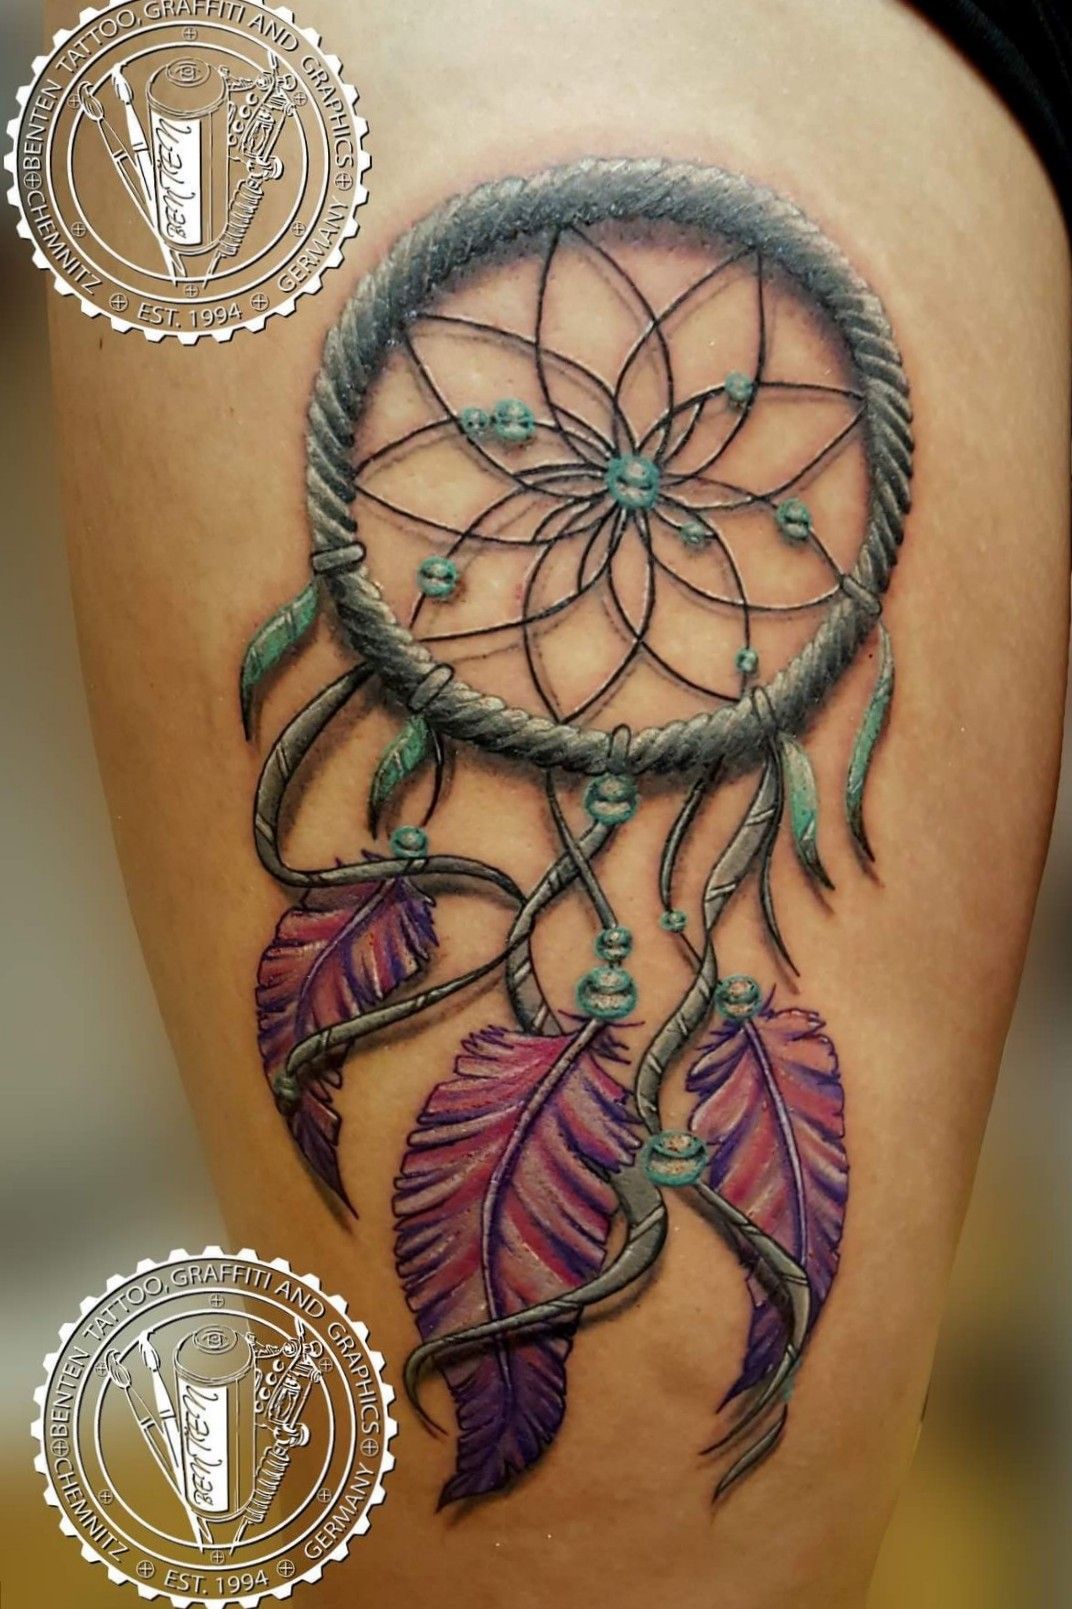 Amazoncojp Black India Tribal Dream Catcher Mandala Flower Henna Tattoo  Sticker Female Arm Art Tattoo Temporary Body List 3D Tattoo Sheet   Clothing Shoes  Jewelry